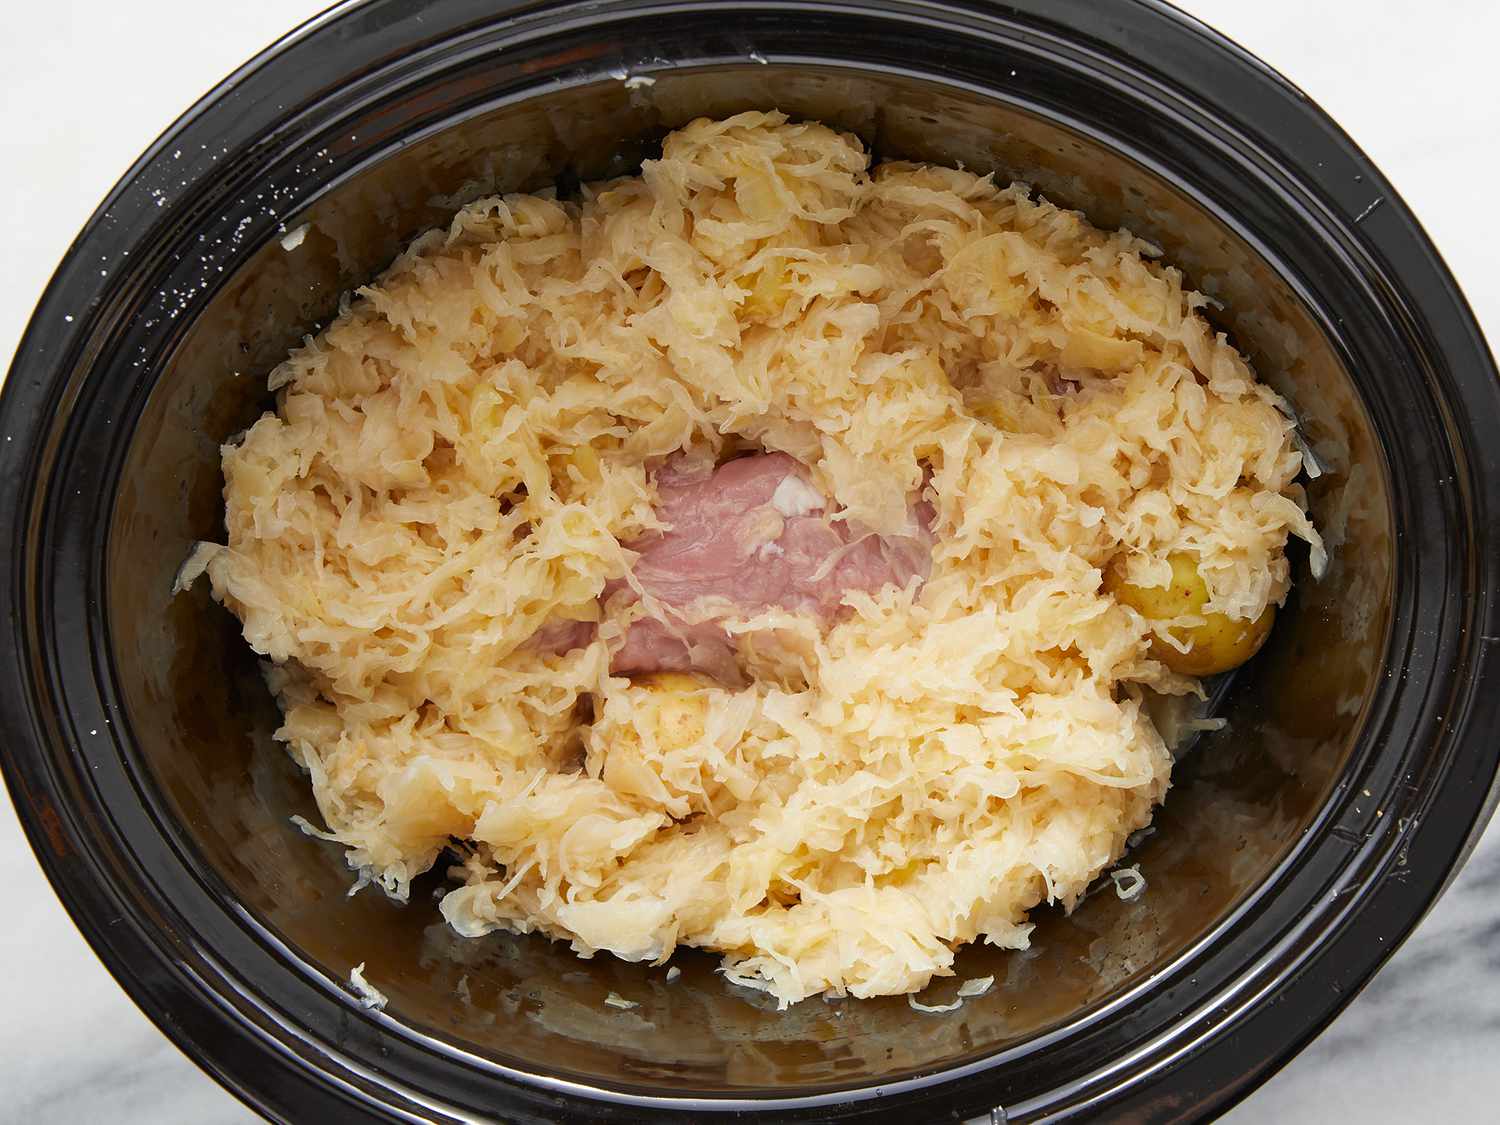 Instant Pot Pork and Sauerkraut Recipe